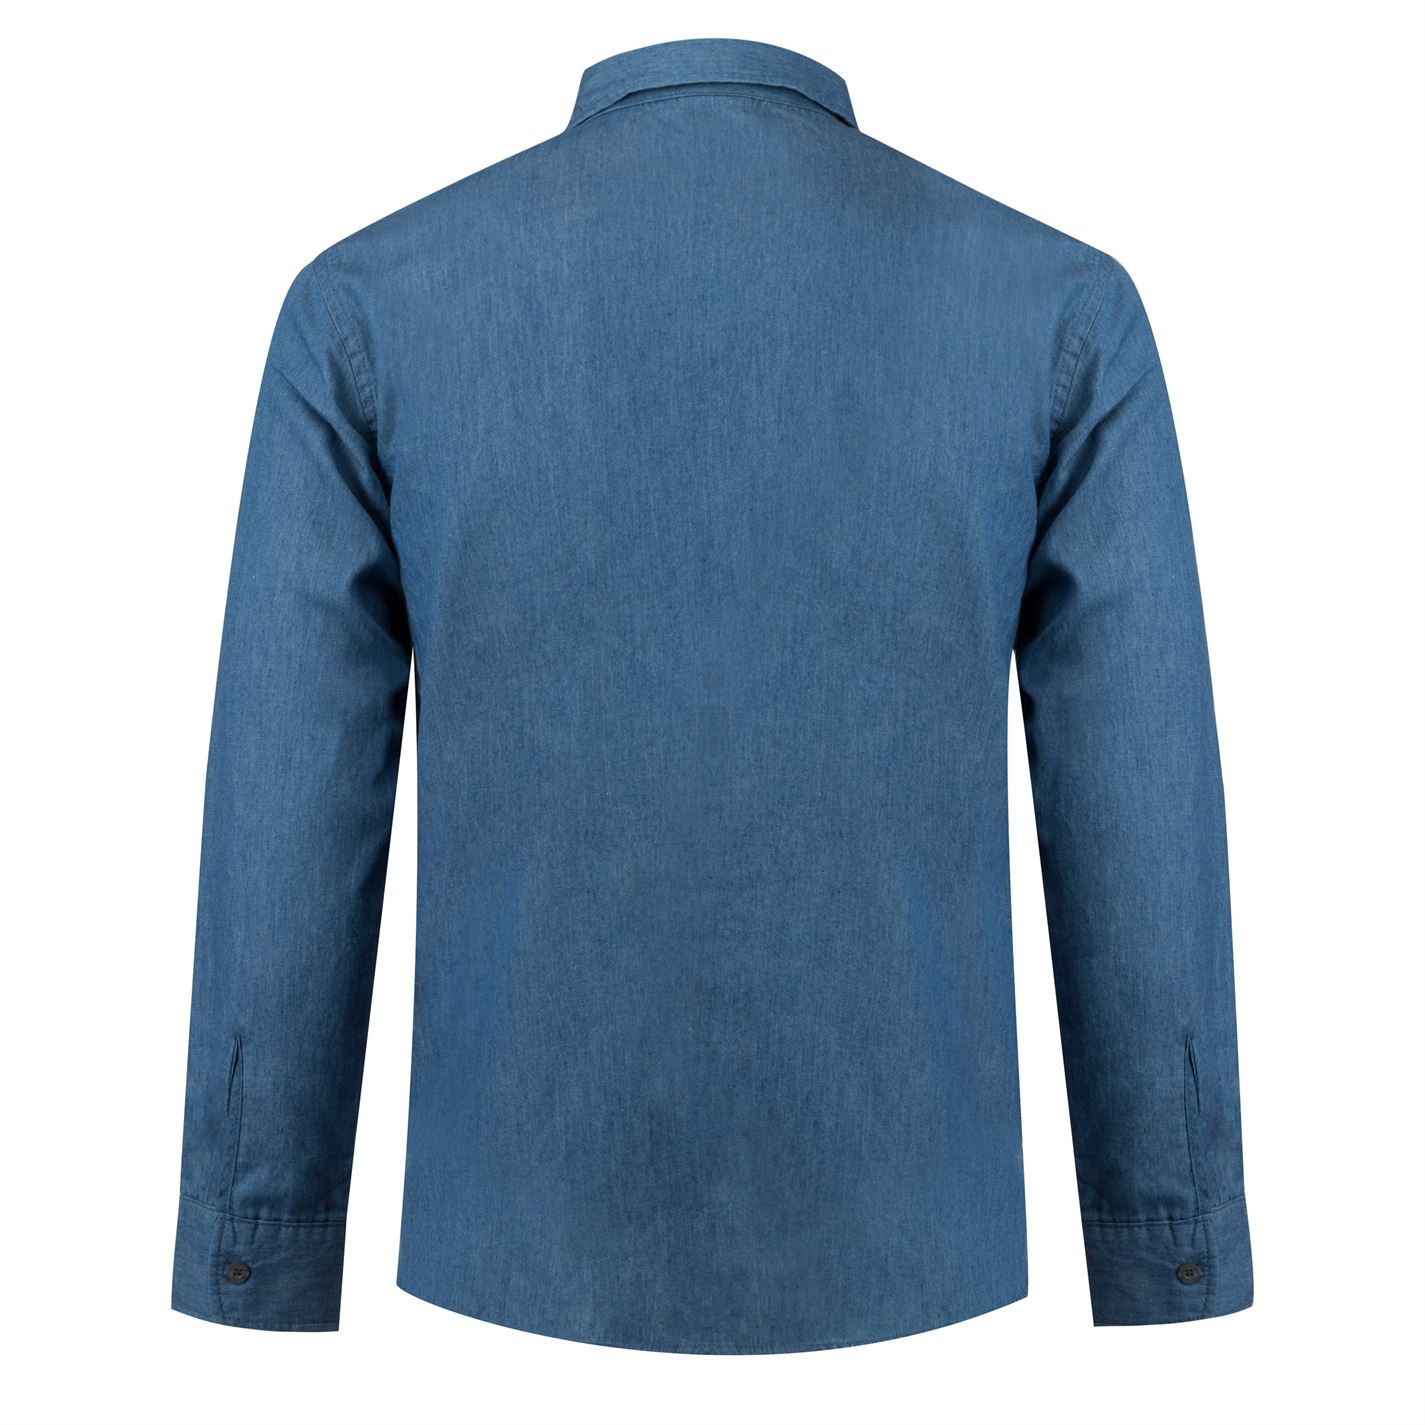 Lee Cooper Pocket Denim Shirt Mens Gents Full Length Sleeve Cotton ...